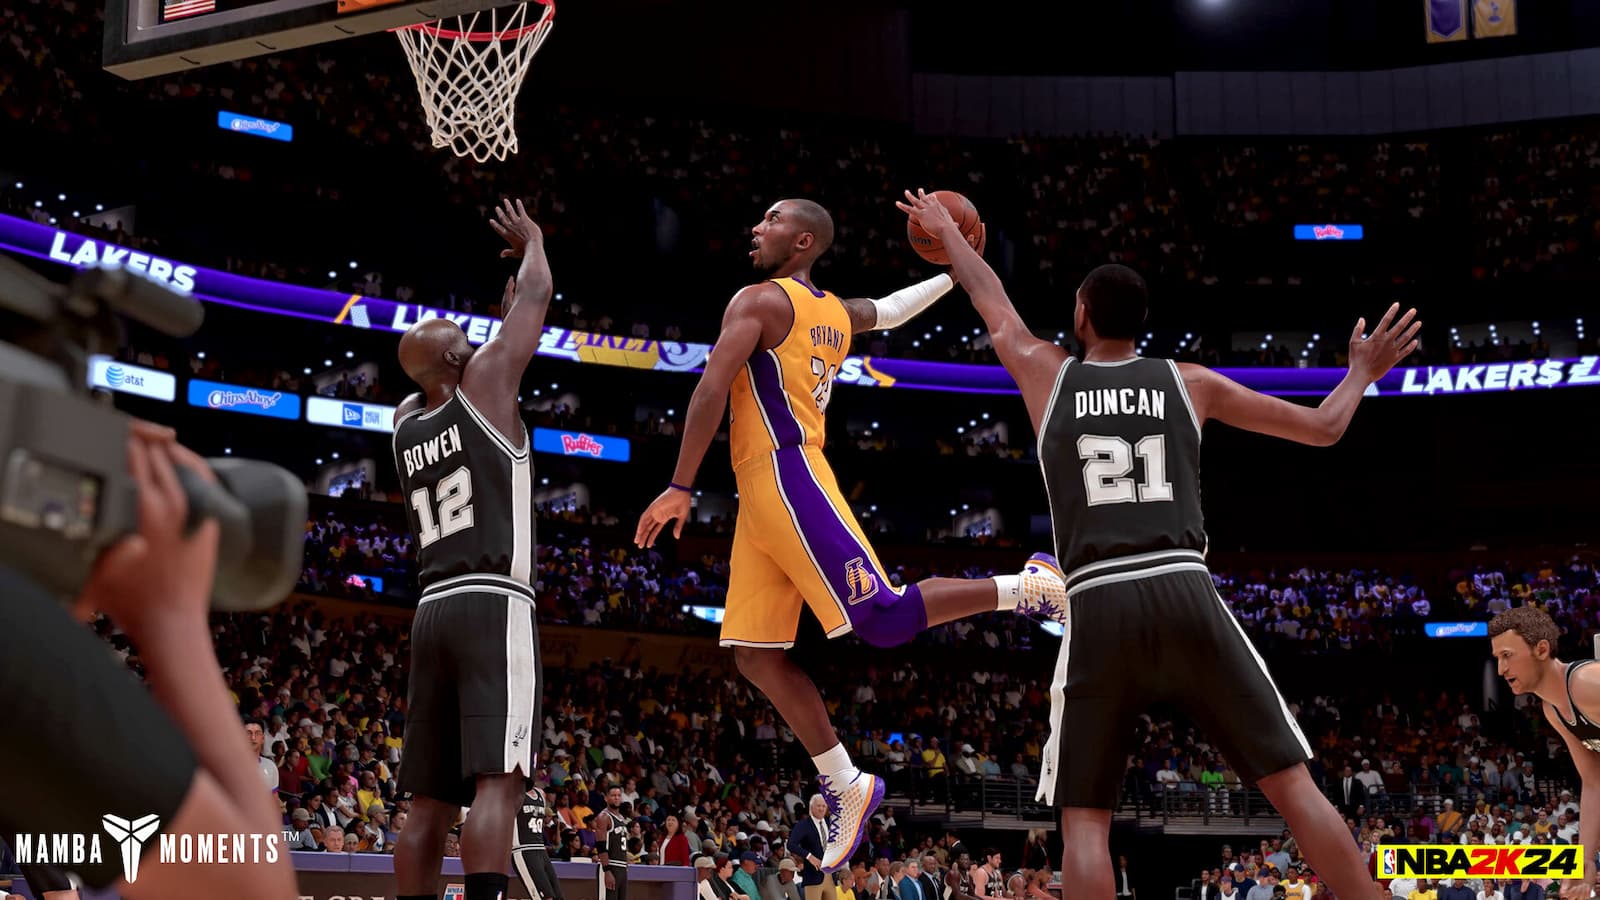 An image of Kobe dunk in NBA 2K24